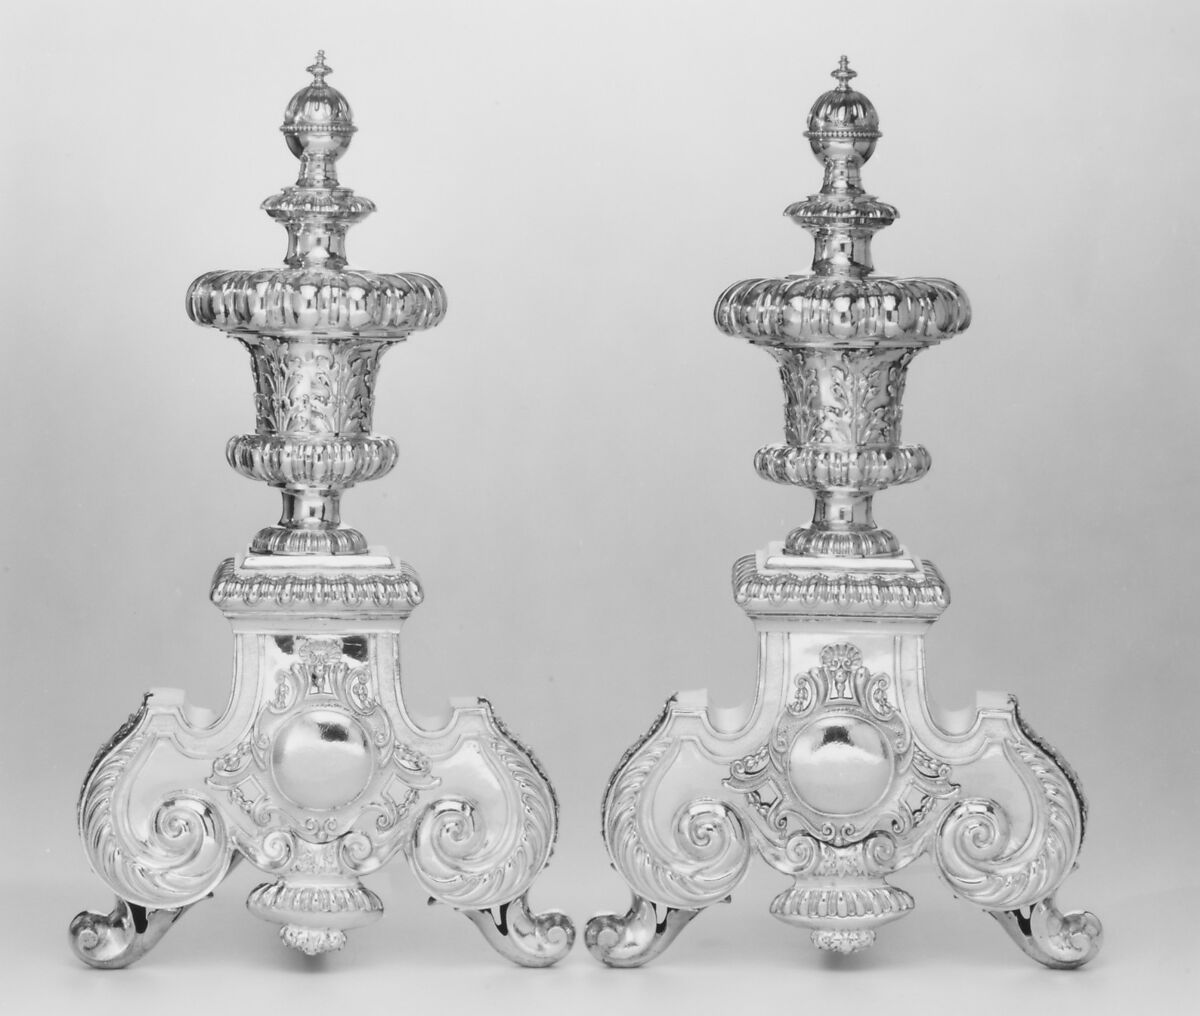 Pair of andirons, Benjamin Pyne (active 1693–1727), Silver, iron, British, London 